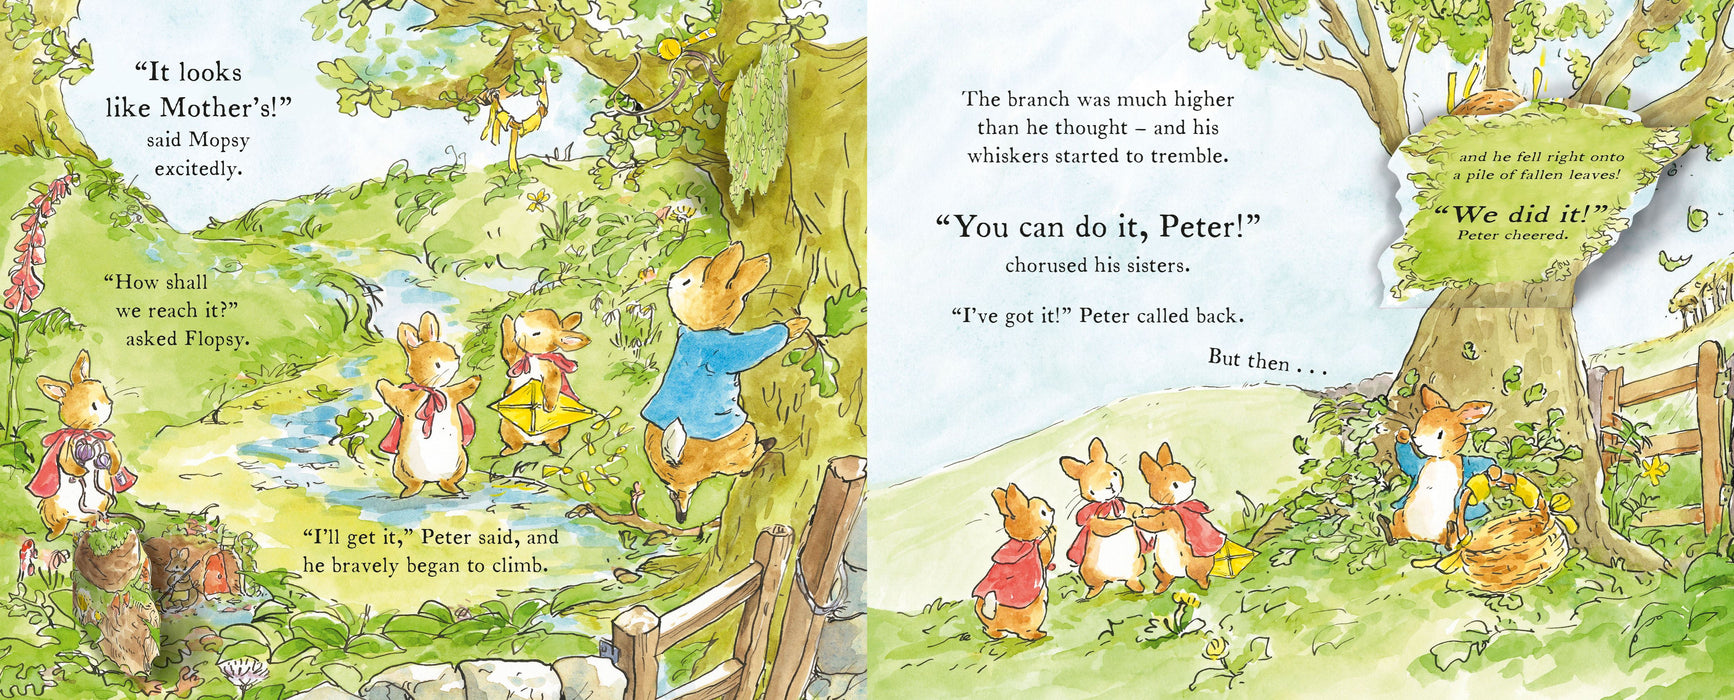 Peter Rabbit: The Great Outdoors Treasure Hunt